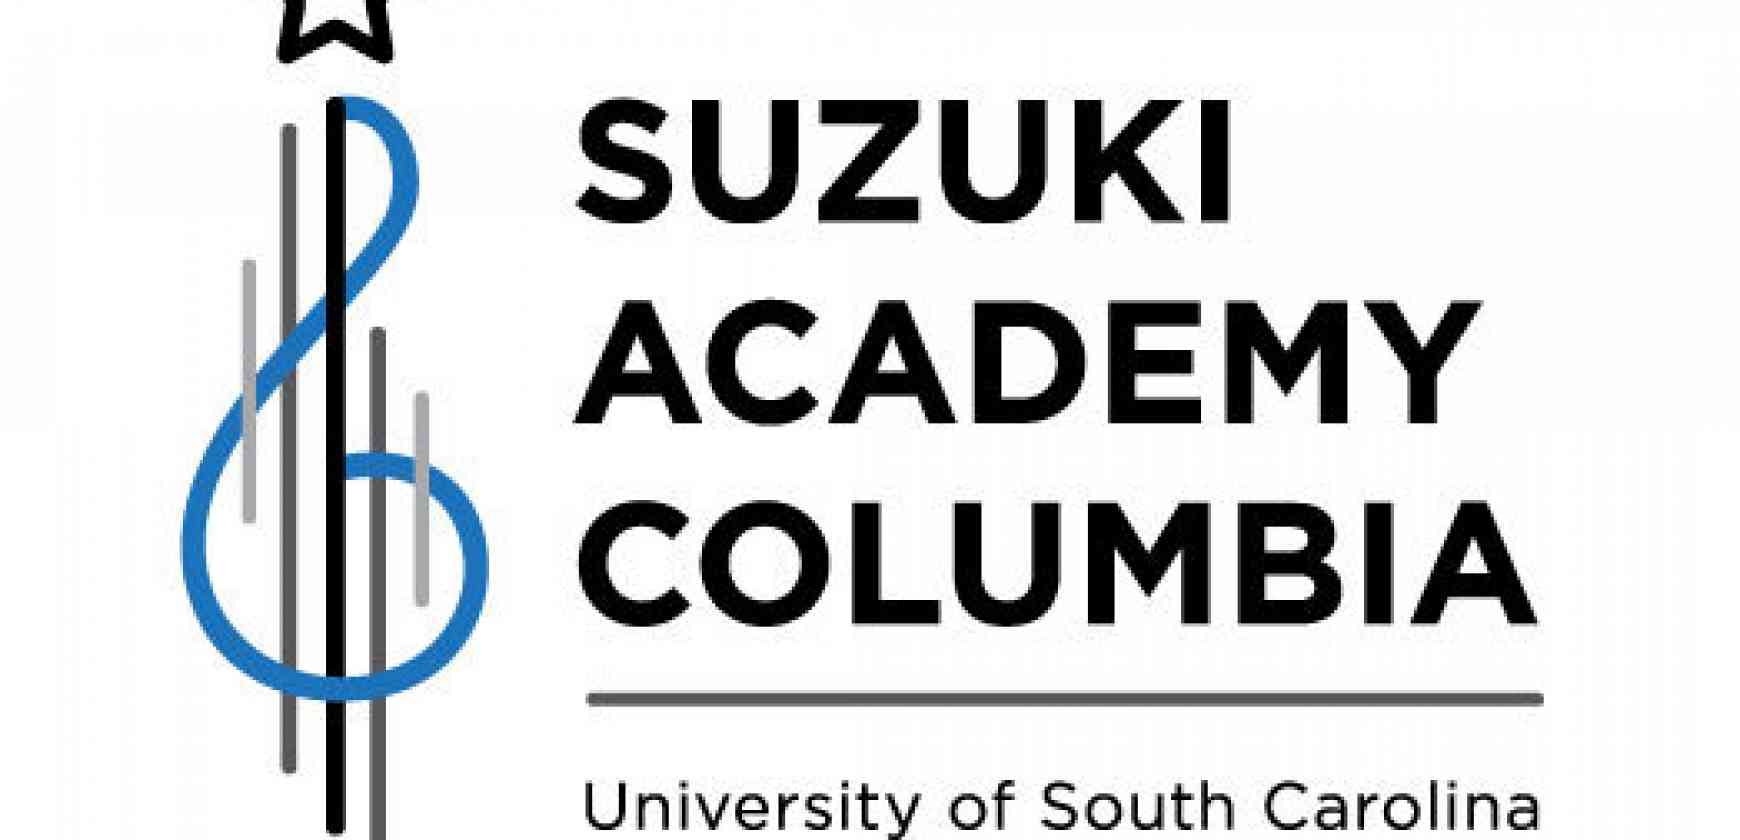 Suzuki Academy of Columbia & USC